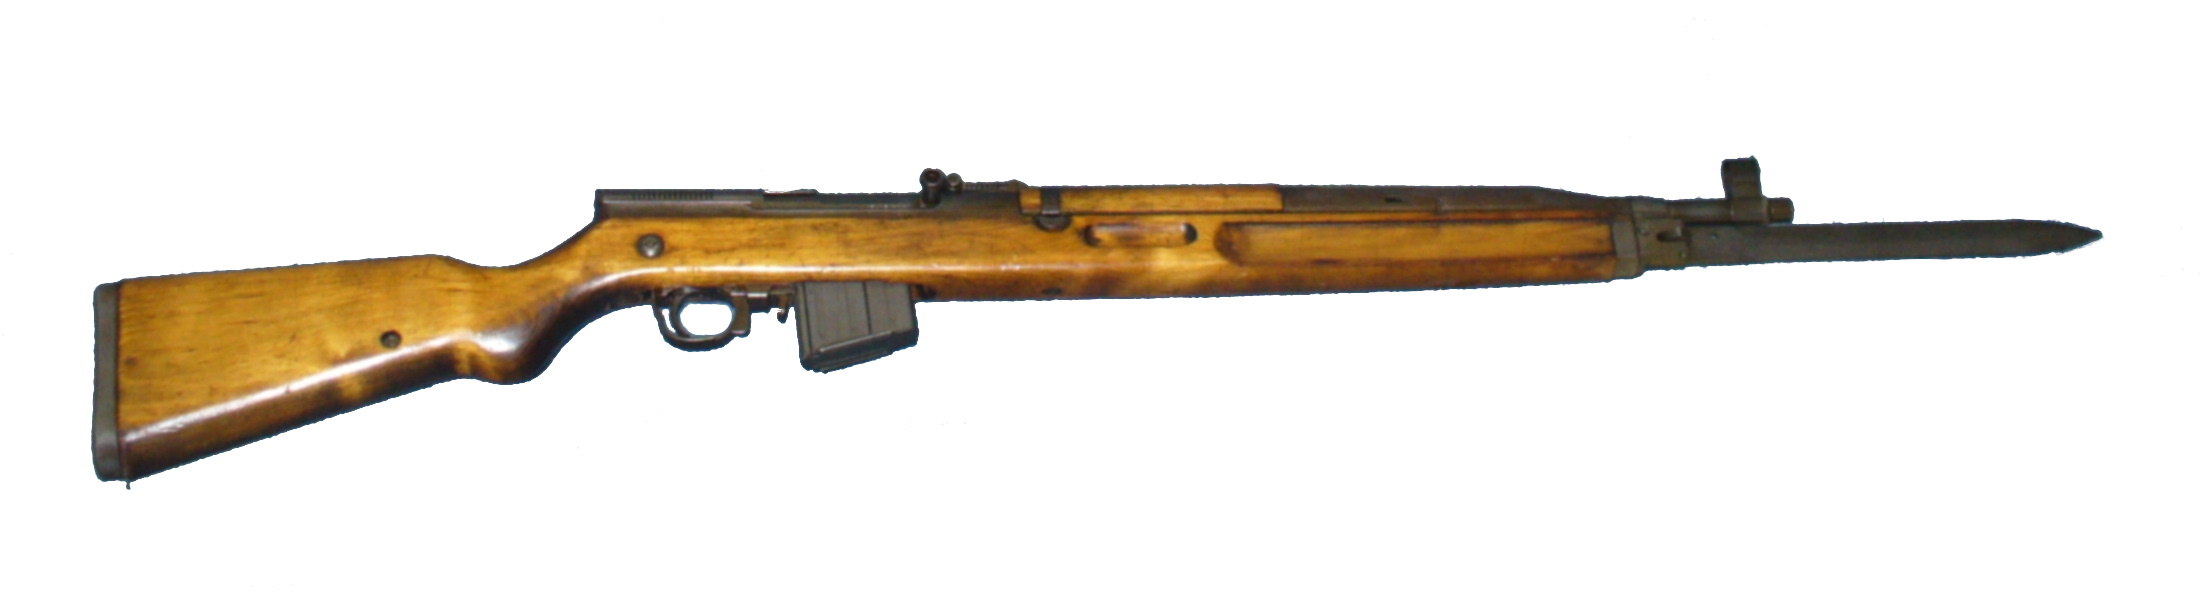 File Vz 52 Rifle Jpg Wikimedia Commons